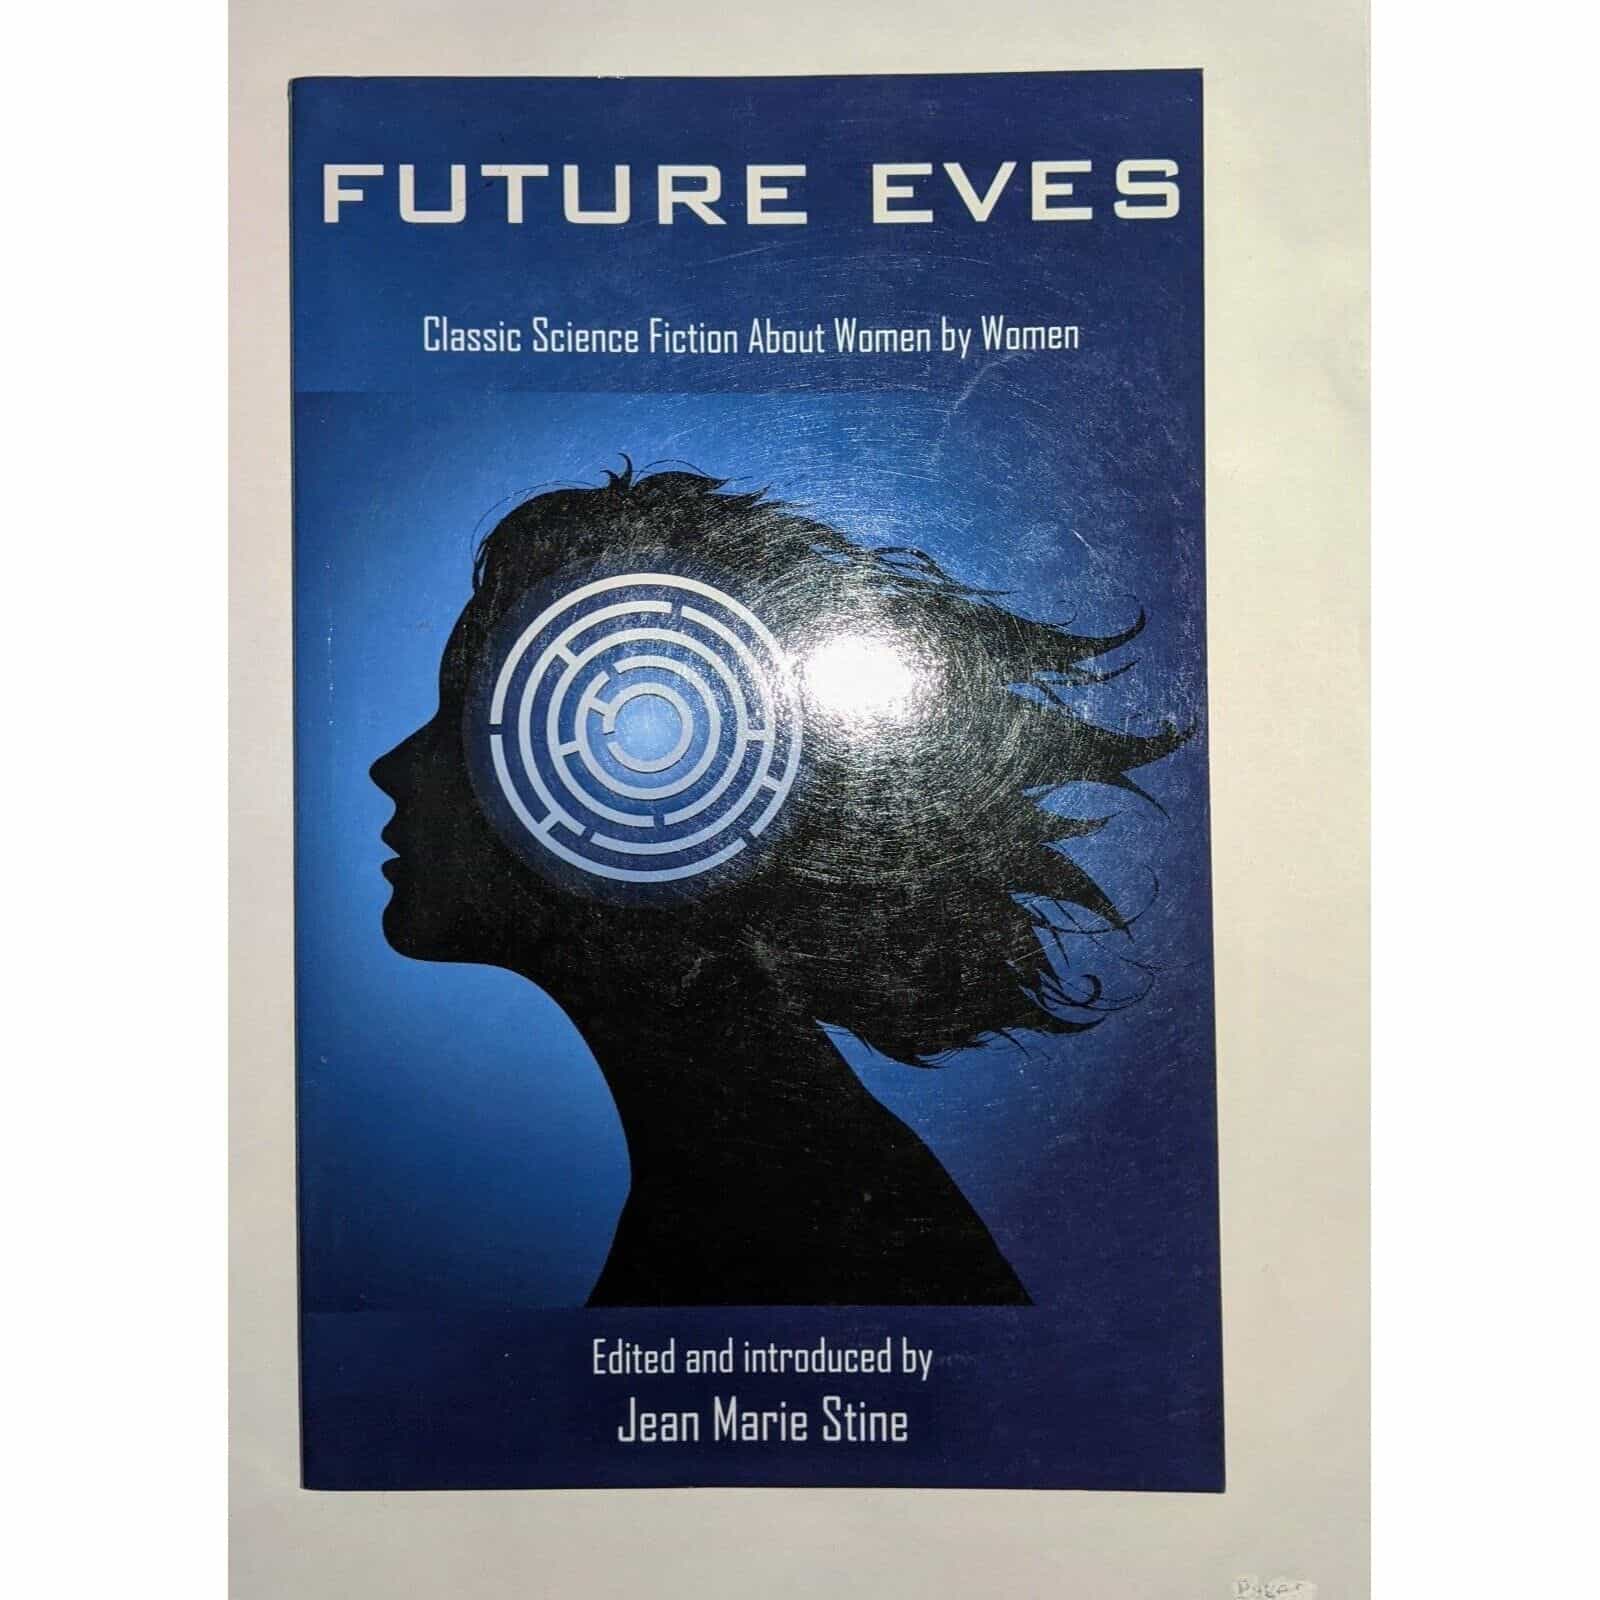 Future Eves (Sci-fi by women) by Jean Marie Stine Book